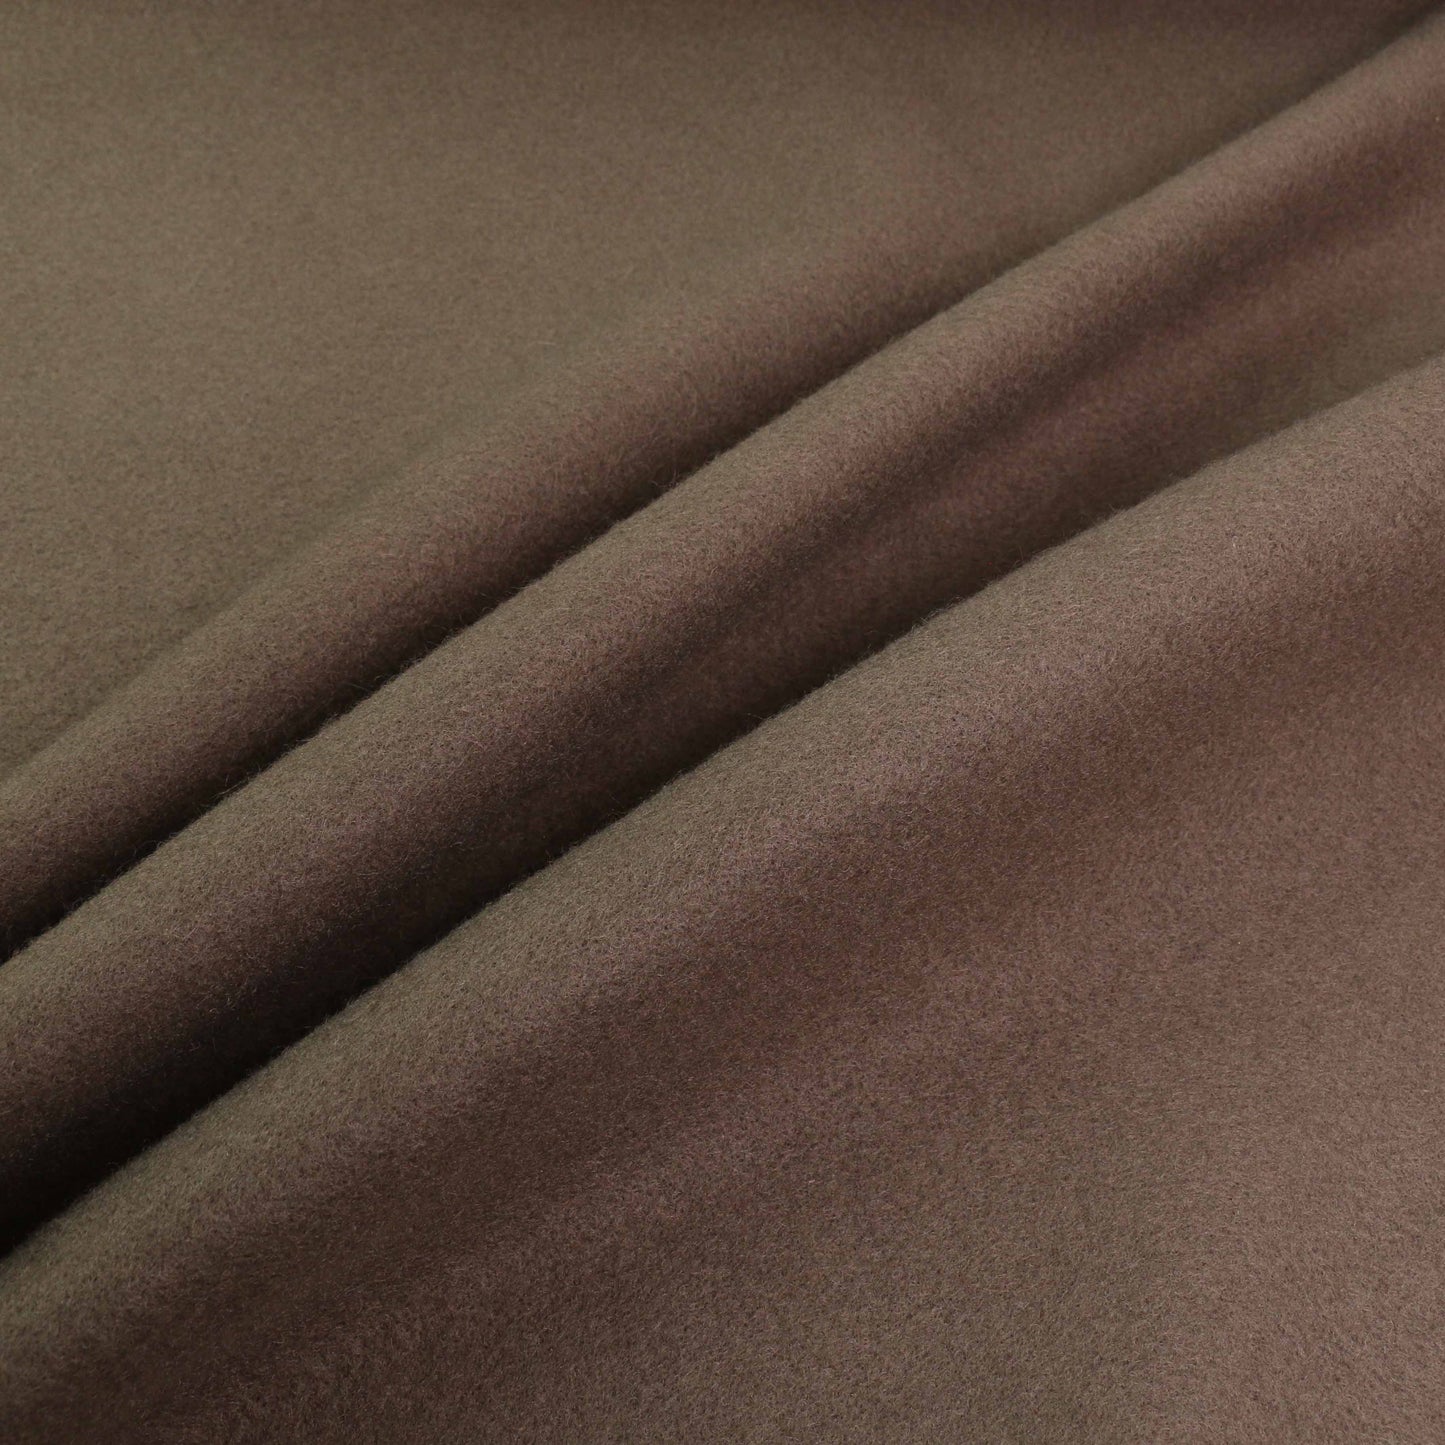 Faux Wool Fabric - Khaki, Burned orange, Taupe